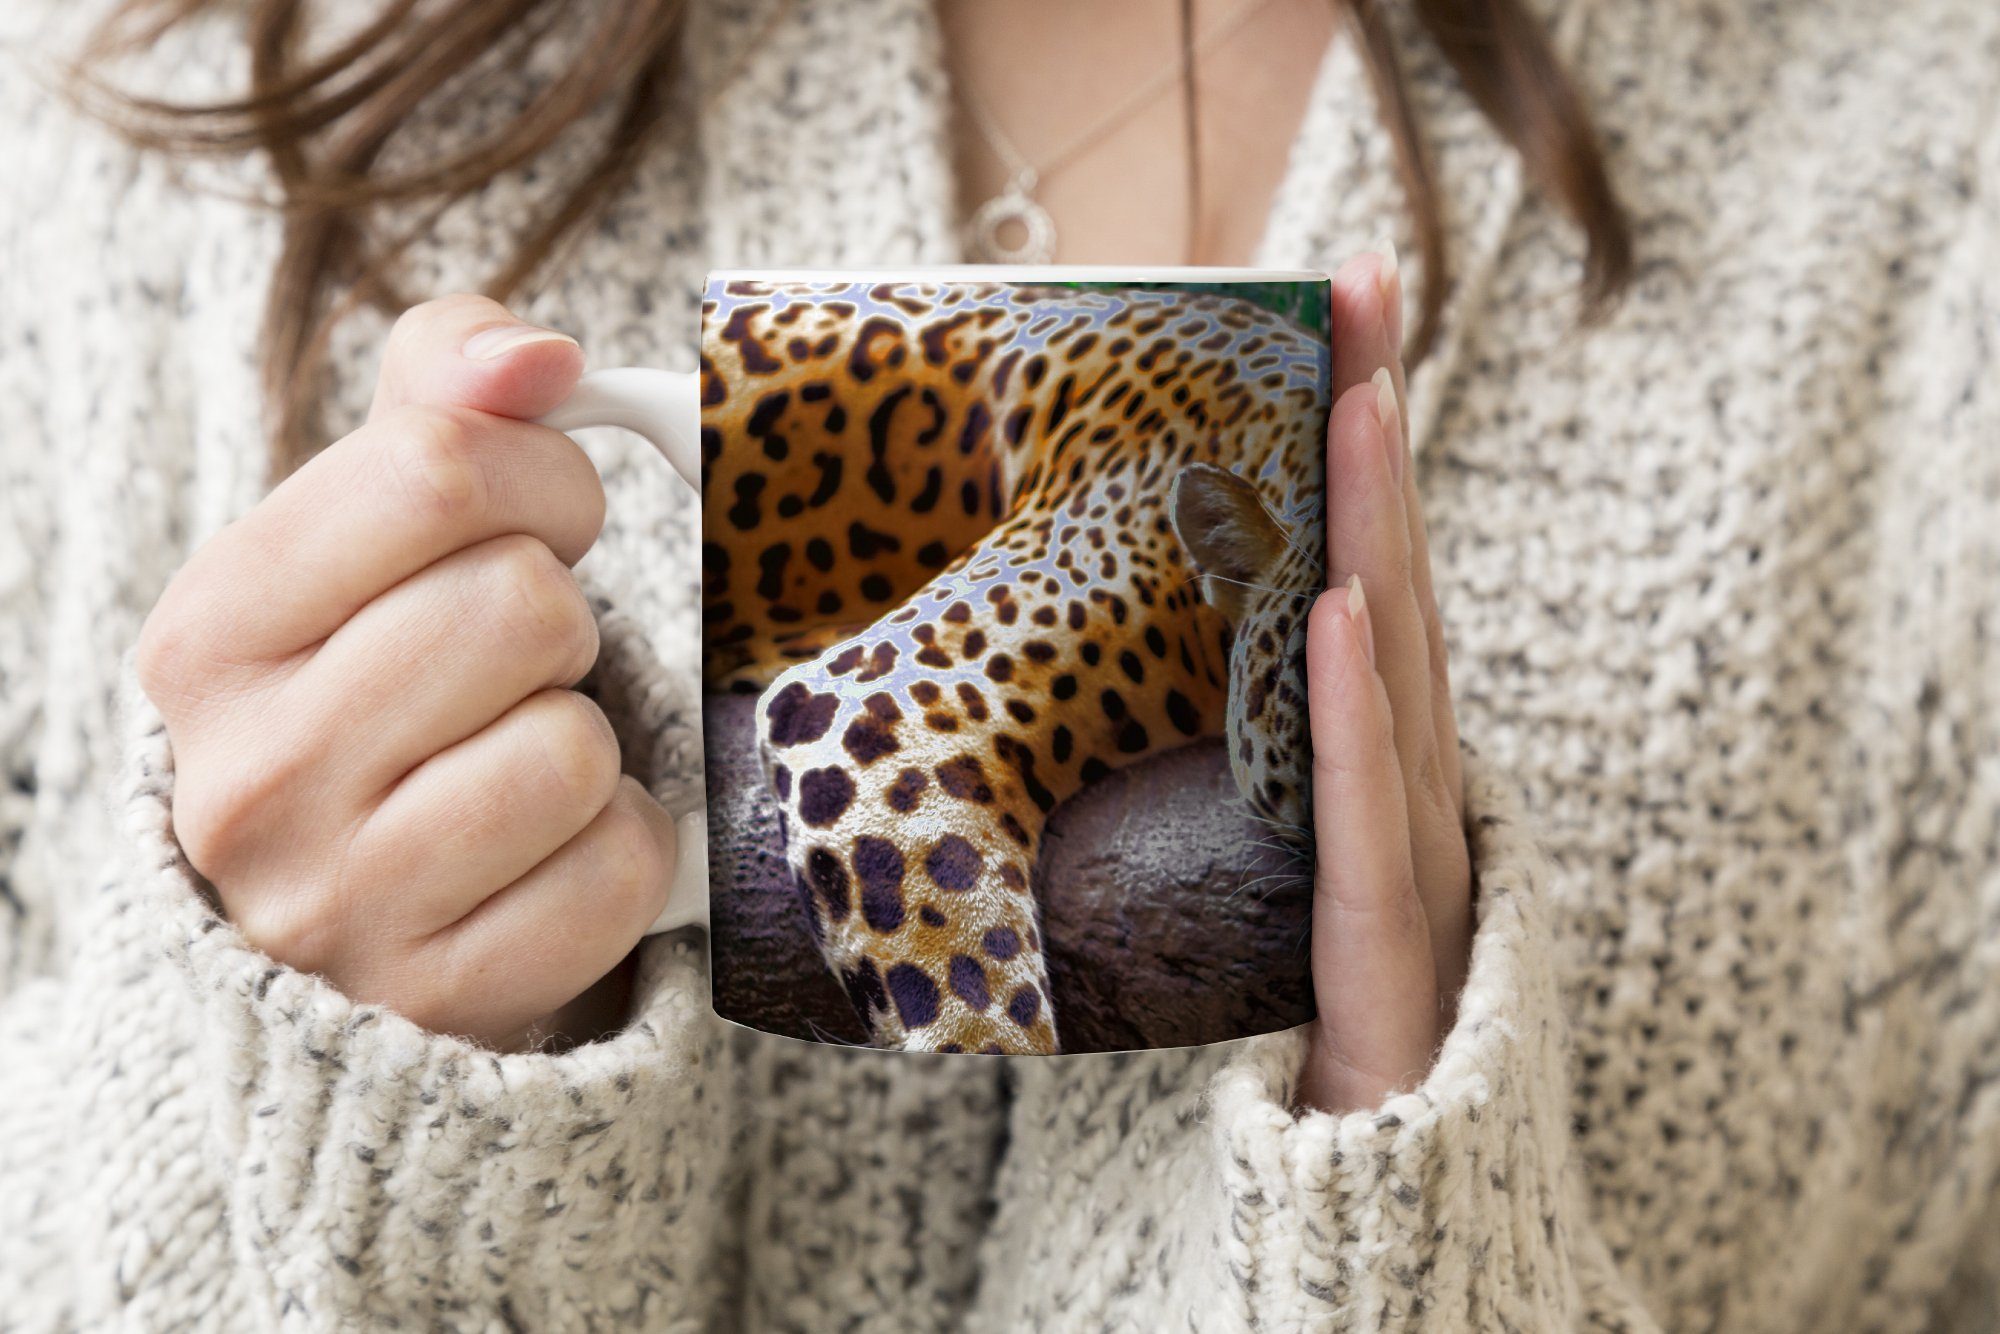 Keramik, Jaguar MuchoWow Kaffeetassen, Tasse Geschenk ruht, Teetasse, Becher, Teetasse,